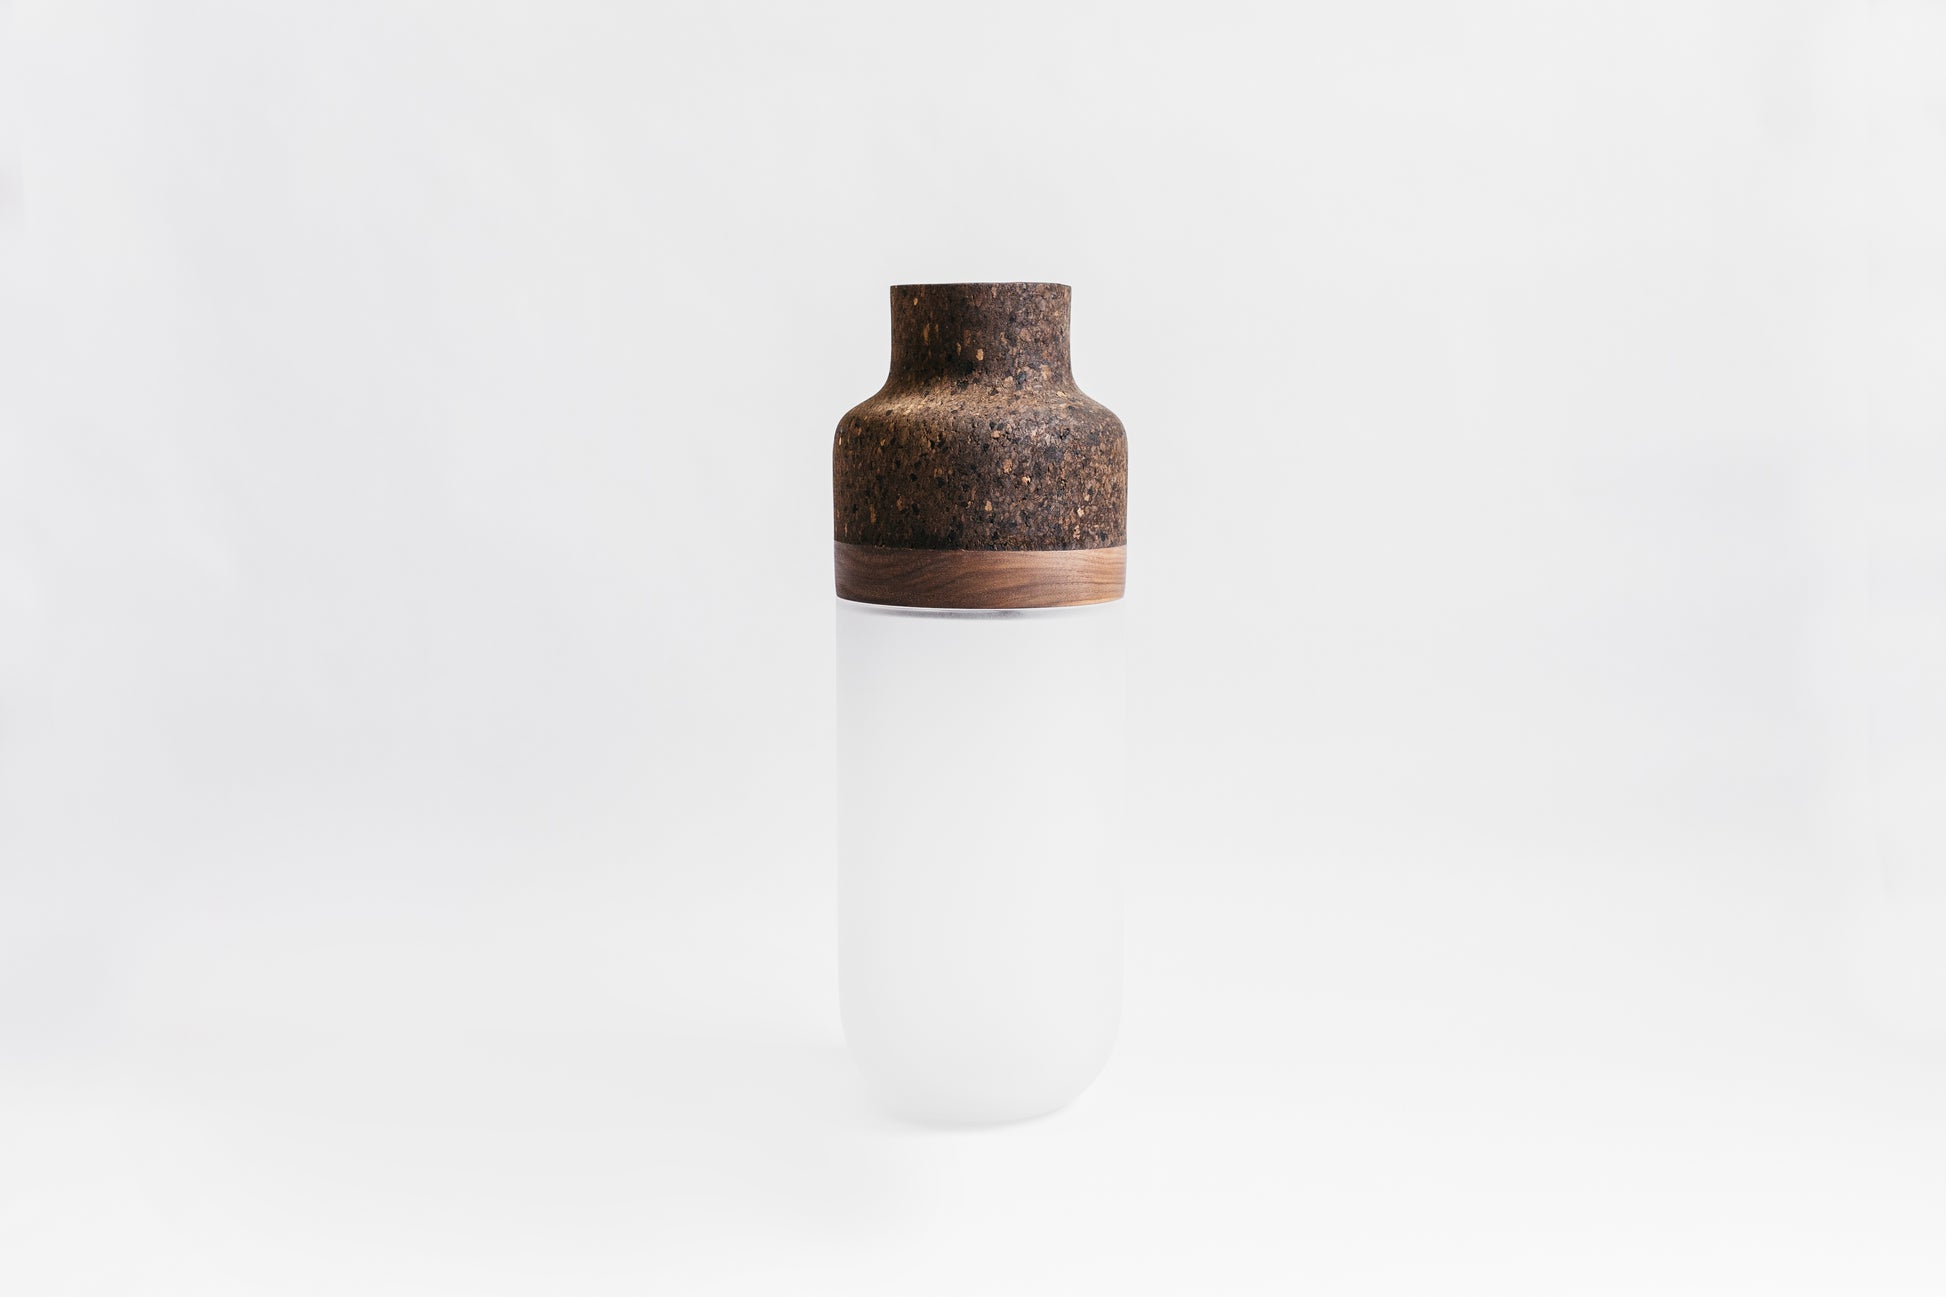 Previous Custom Marais Vase - Charcoal Cork and Walnut